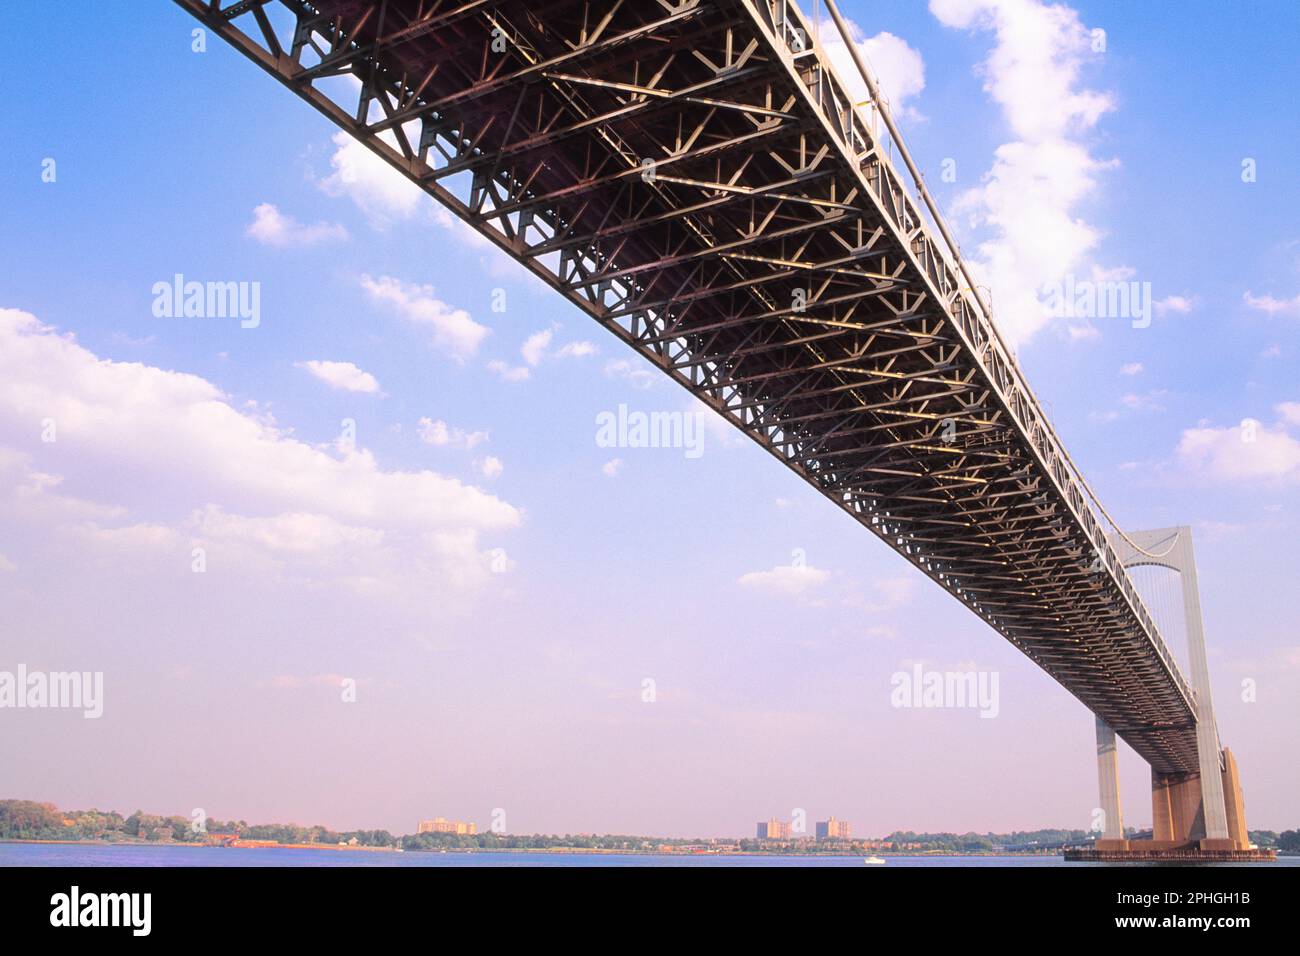 Bronx-Whitestone Bridge. suspension bridge over the East River on the Upper East Side of New York Stock Photo